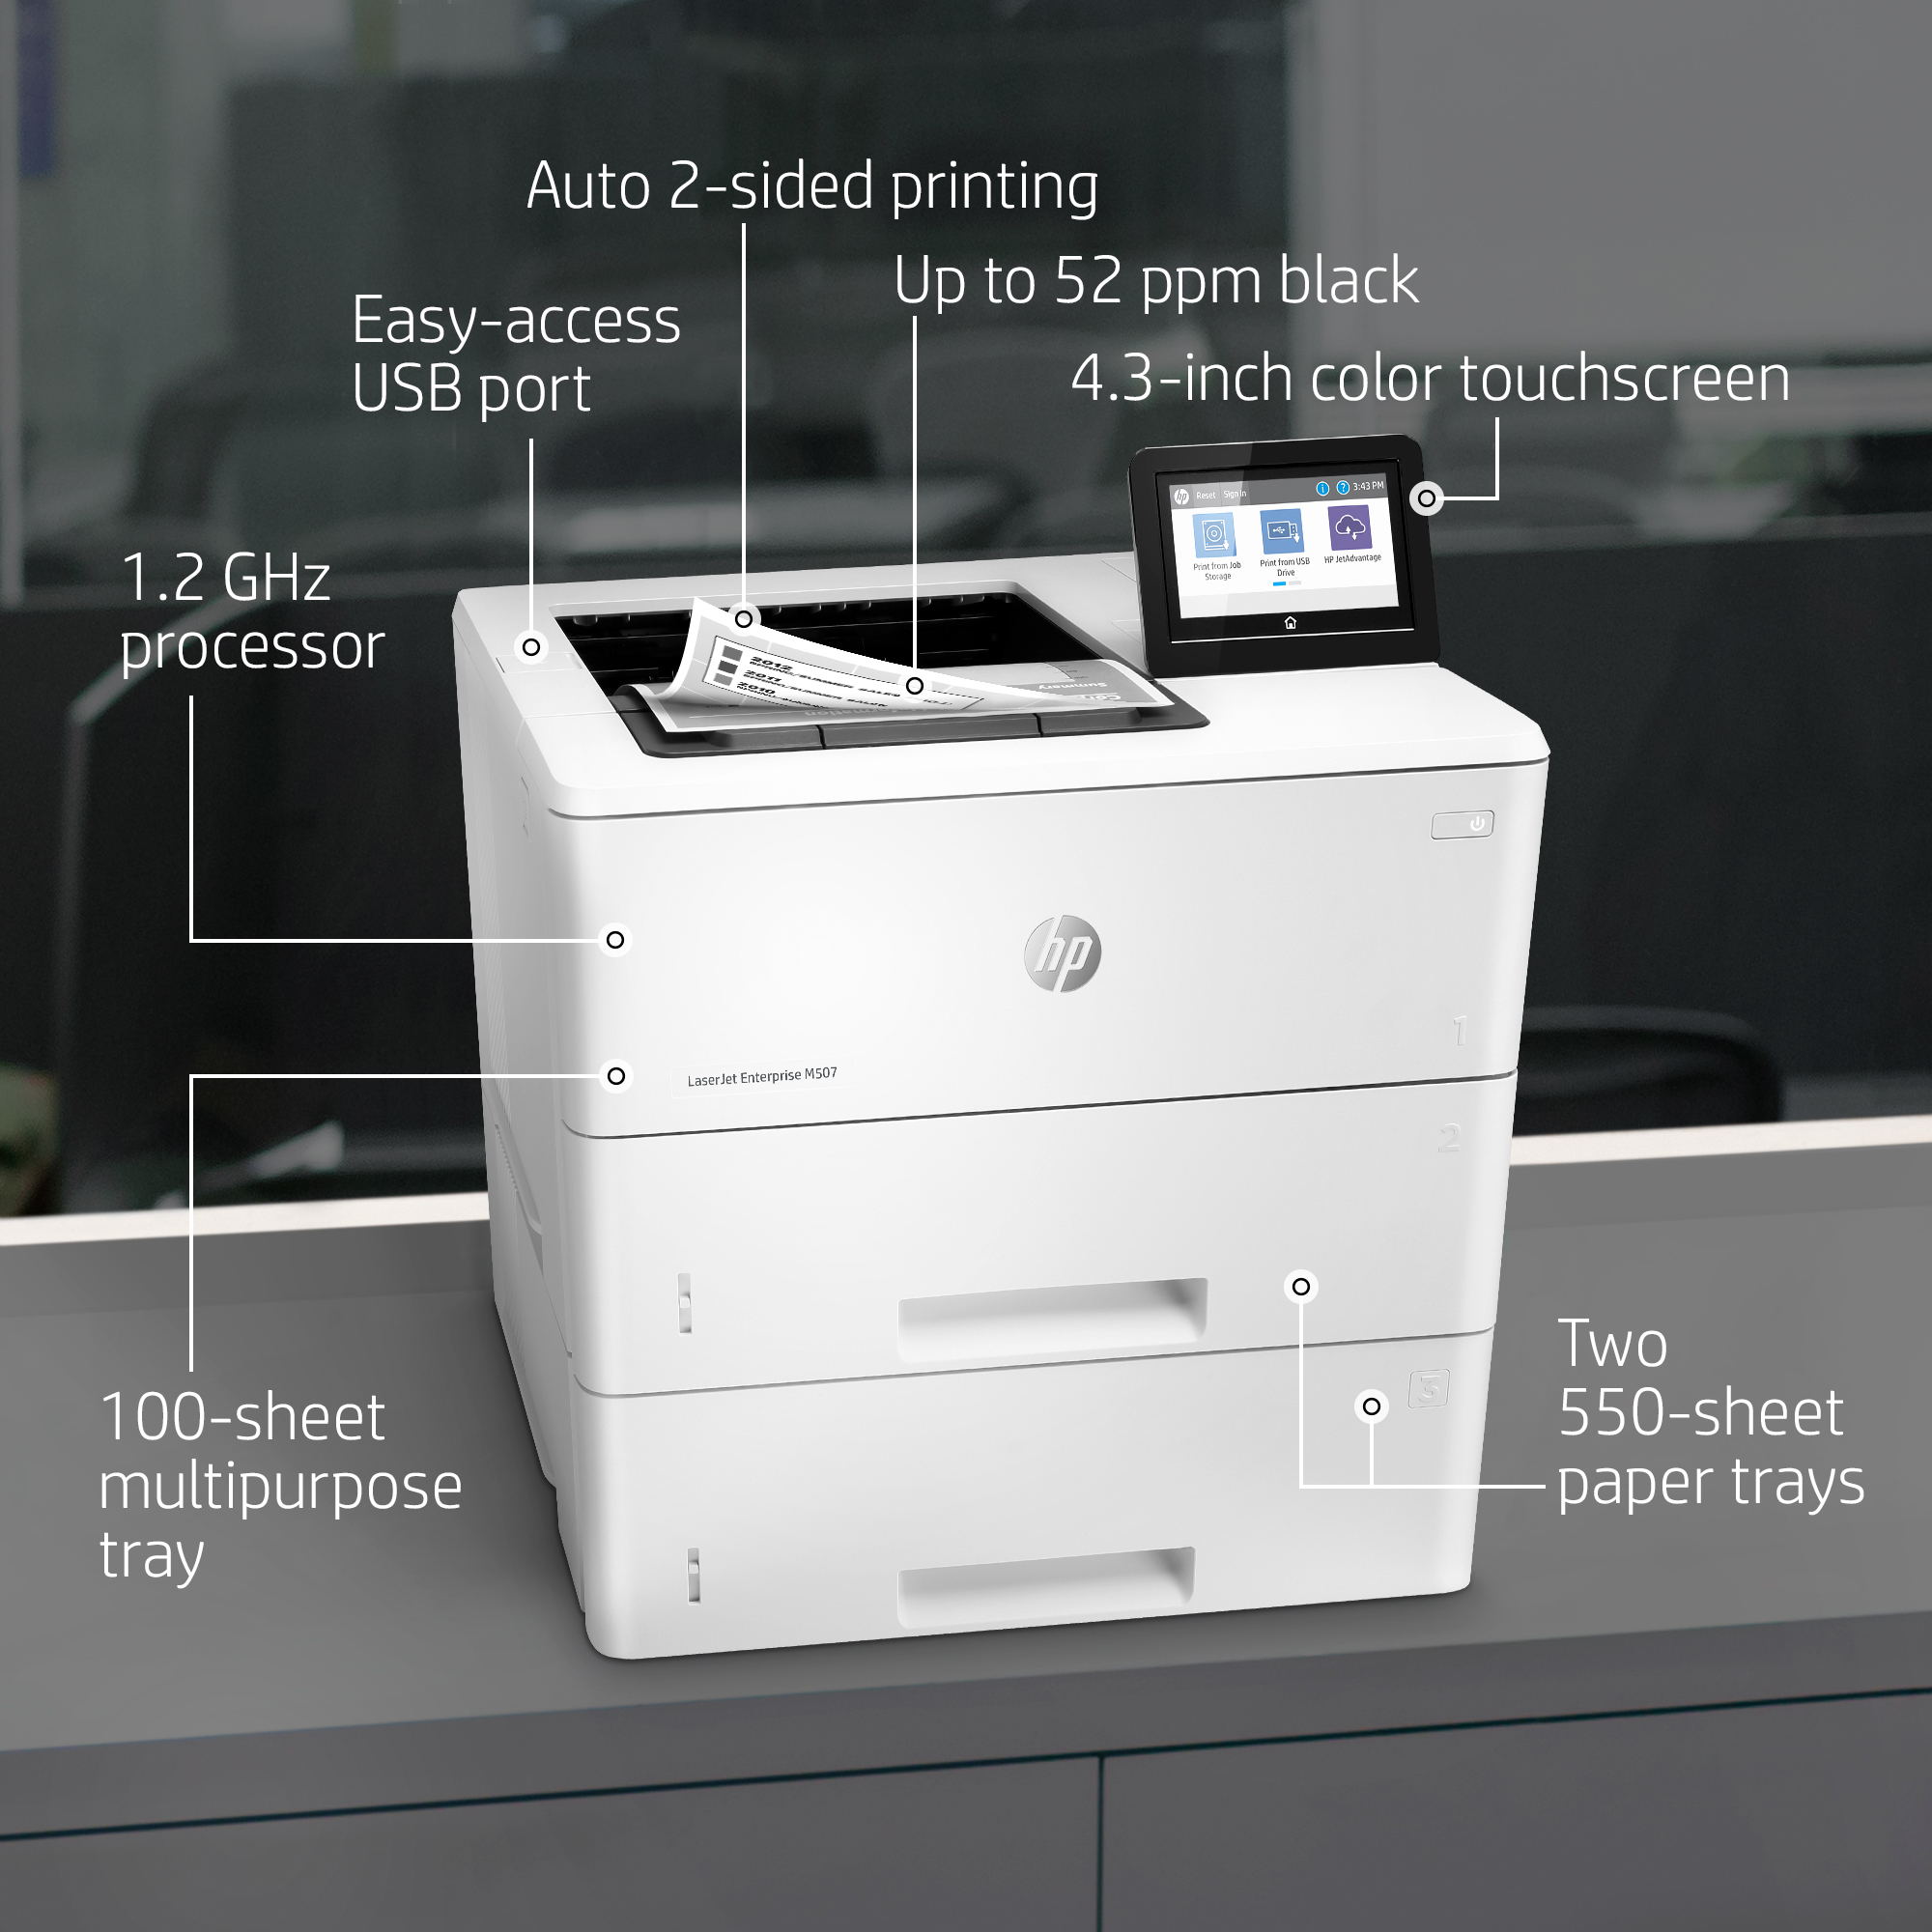 HP 32 lb. Laser Printer Paper